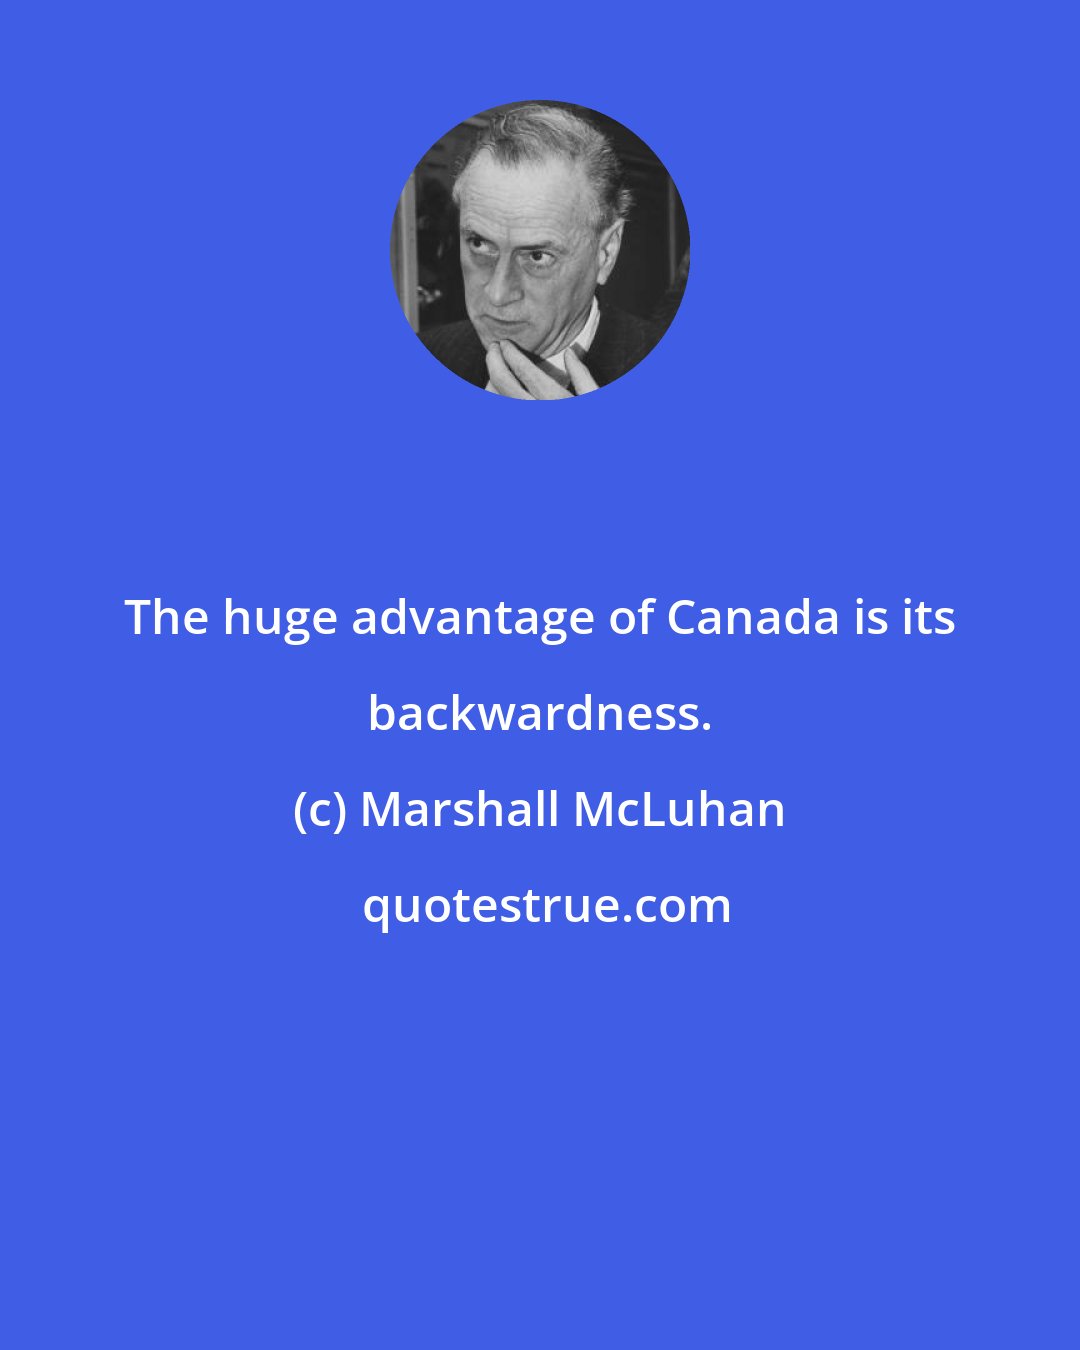 Marshall McLuhan: The huge advantage of Canada is its backwardness.